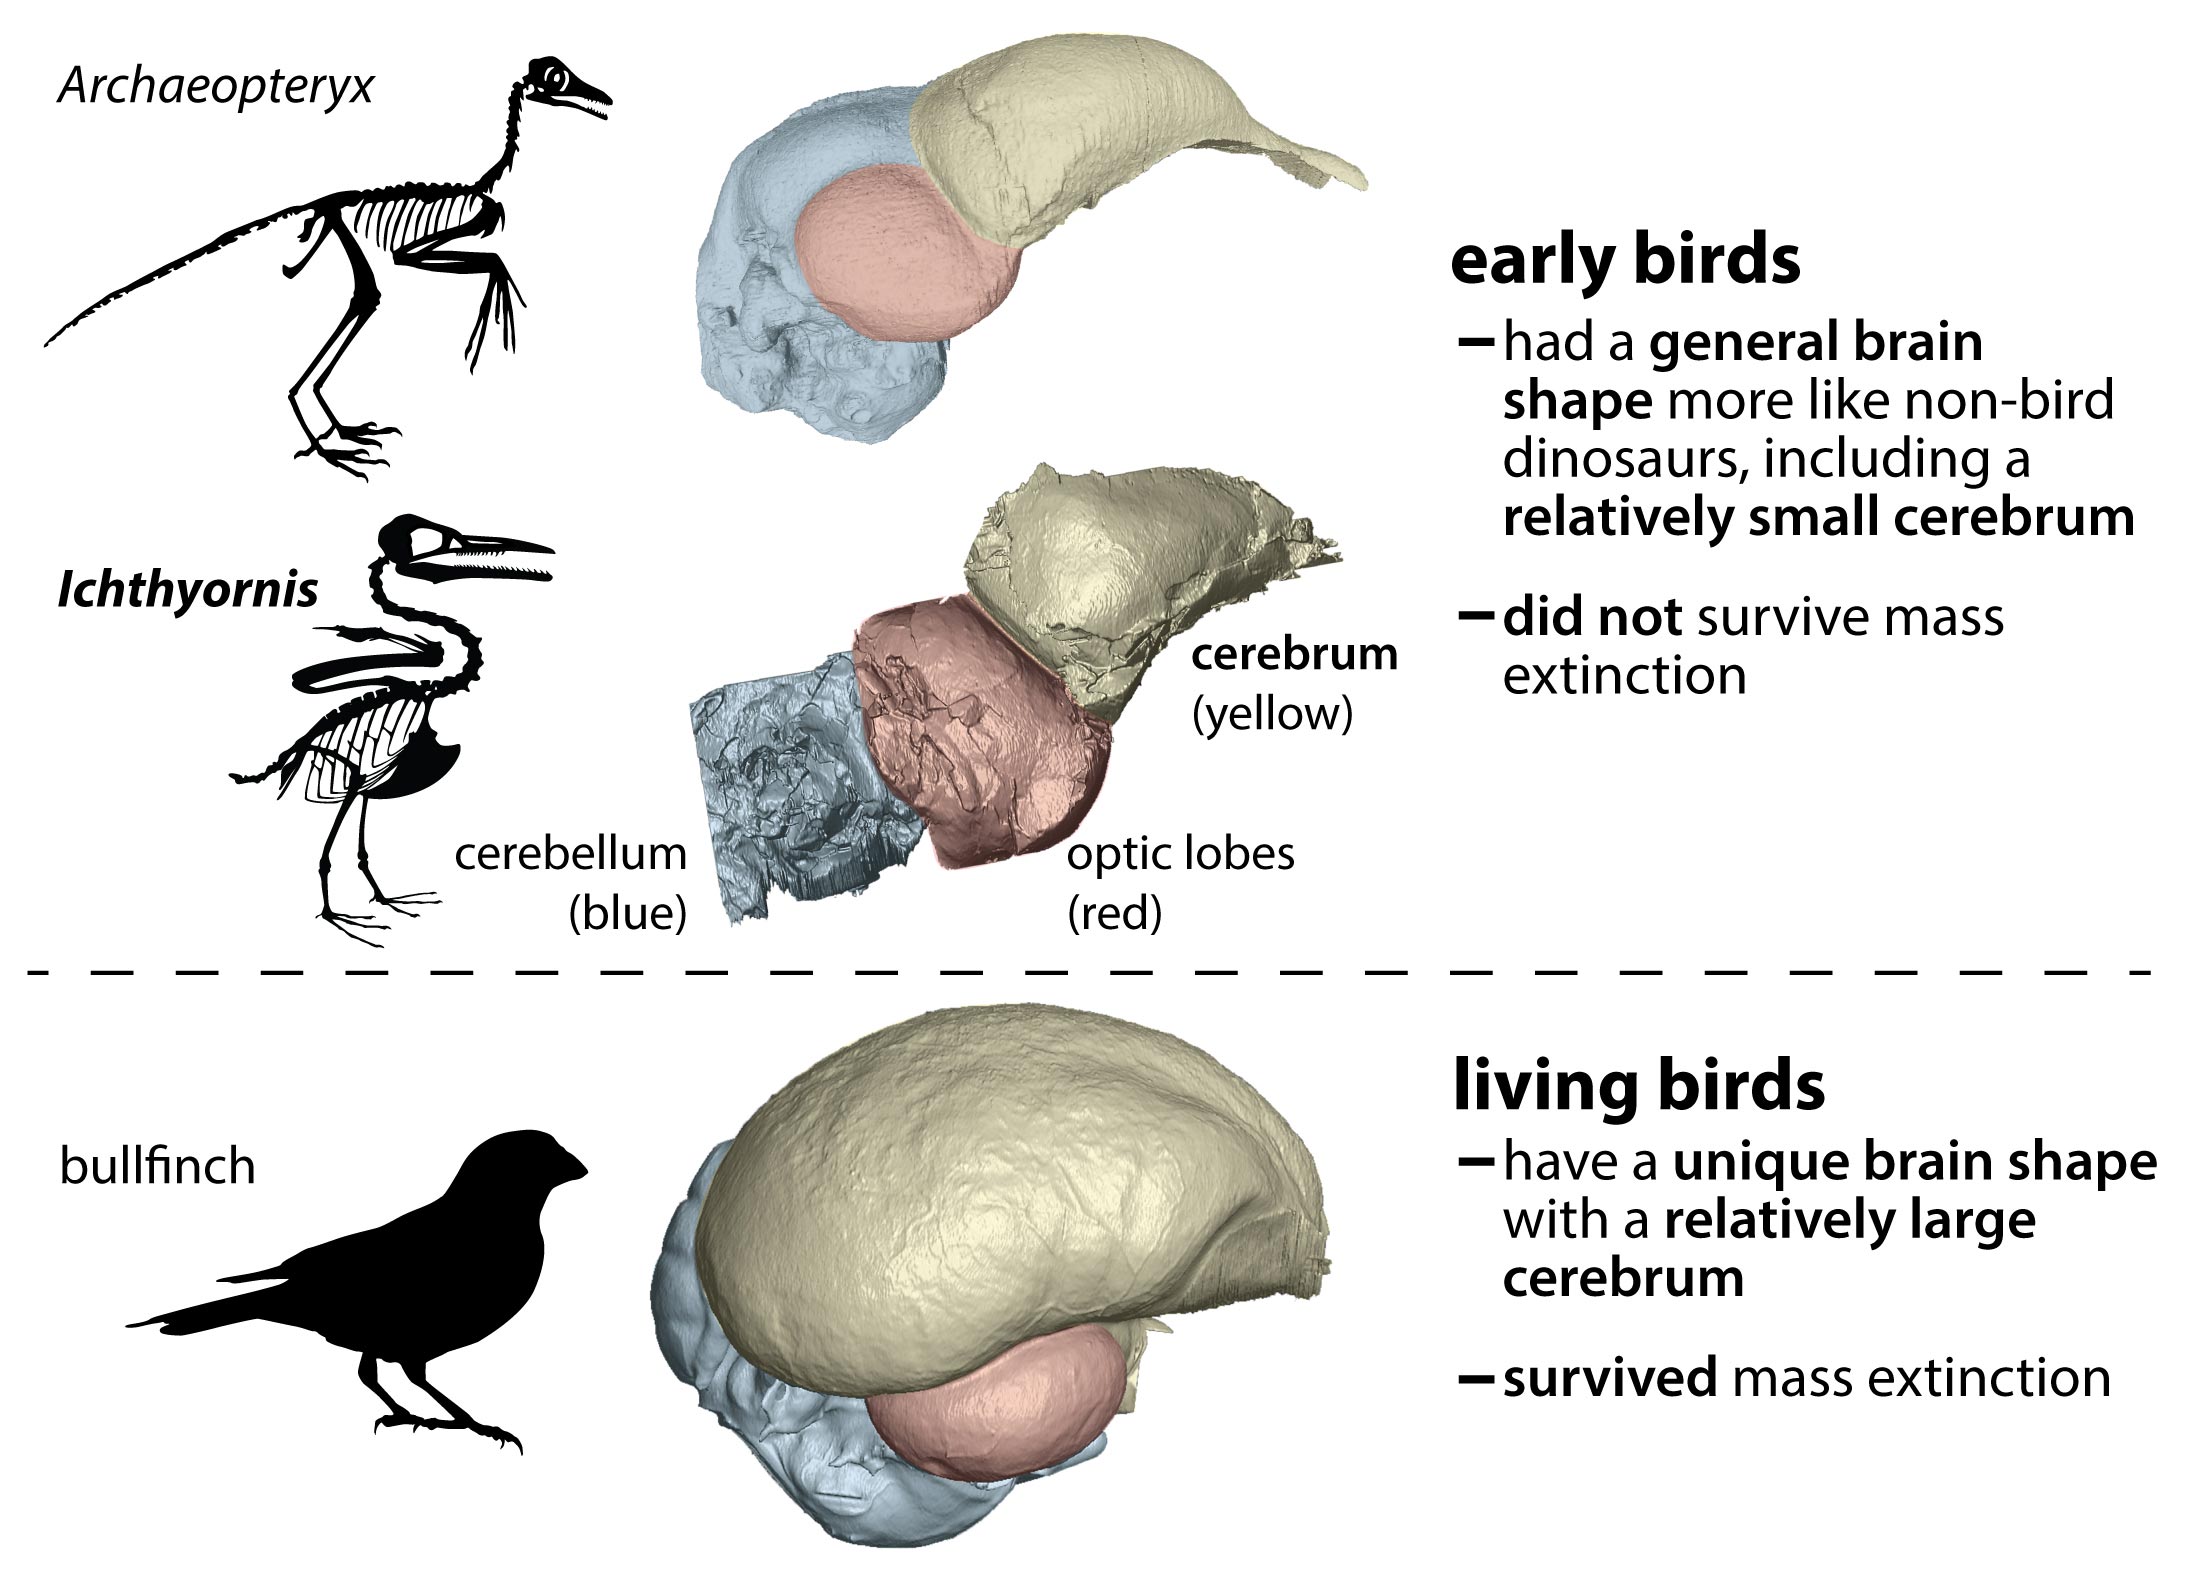 Otak burung meninggalkan dinosaurus lain